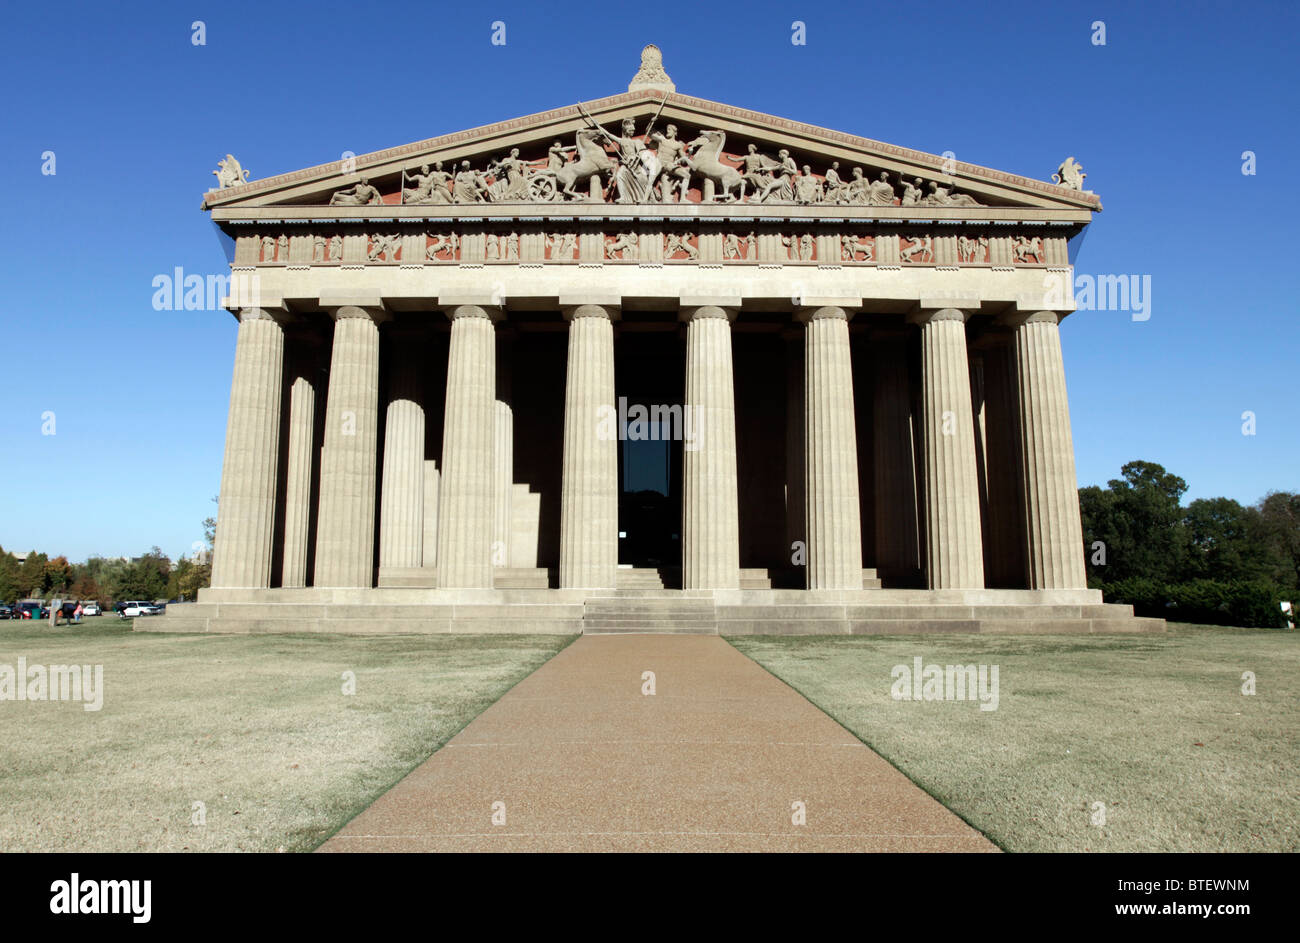 Historic Parthenon Temple replica built in Nashville in 1897 in Centennial Park, Nashville's premier urban park. Stock Photo